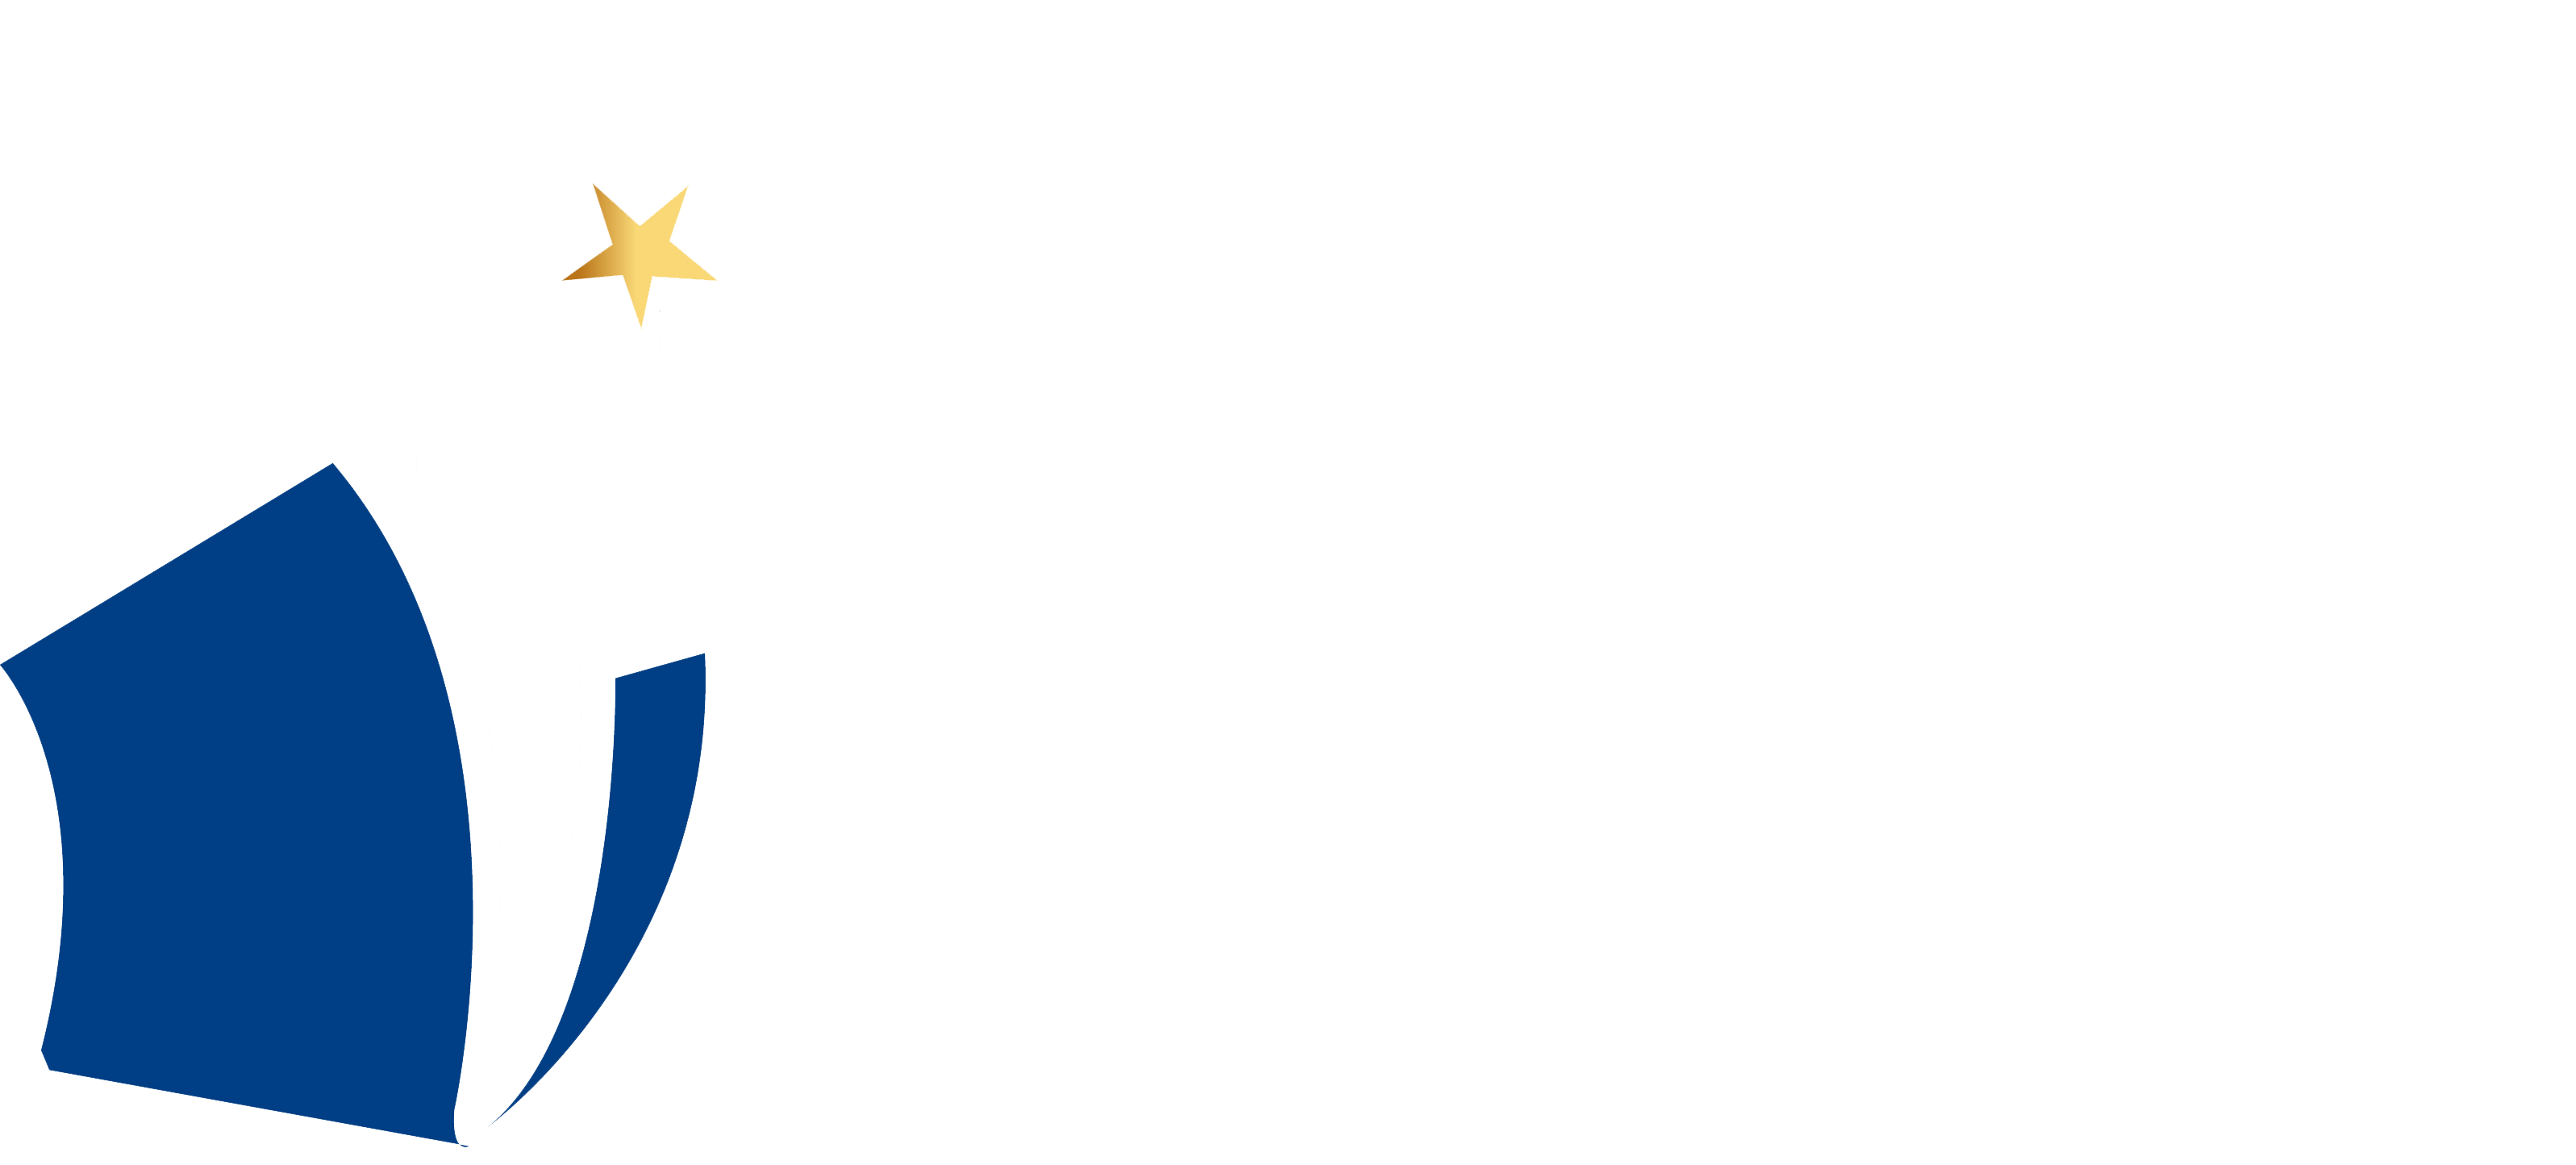 The Book Behind Awards